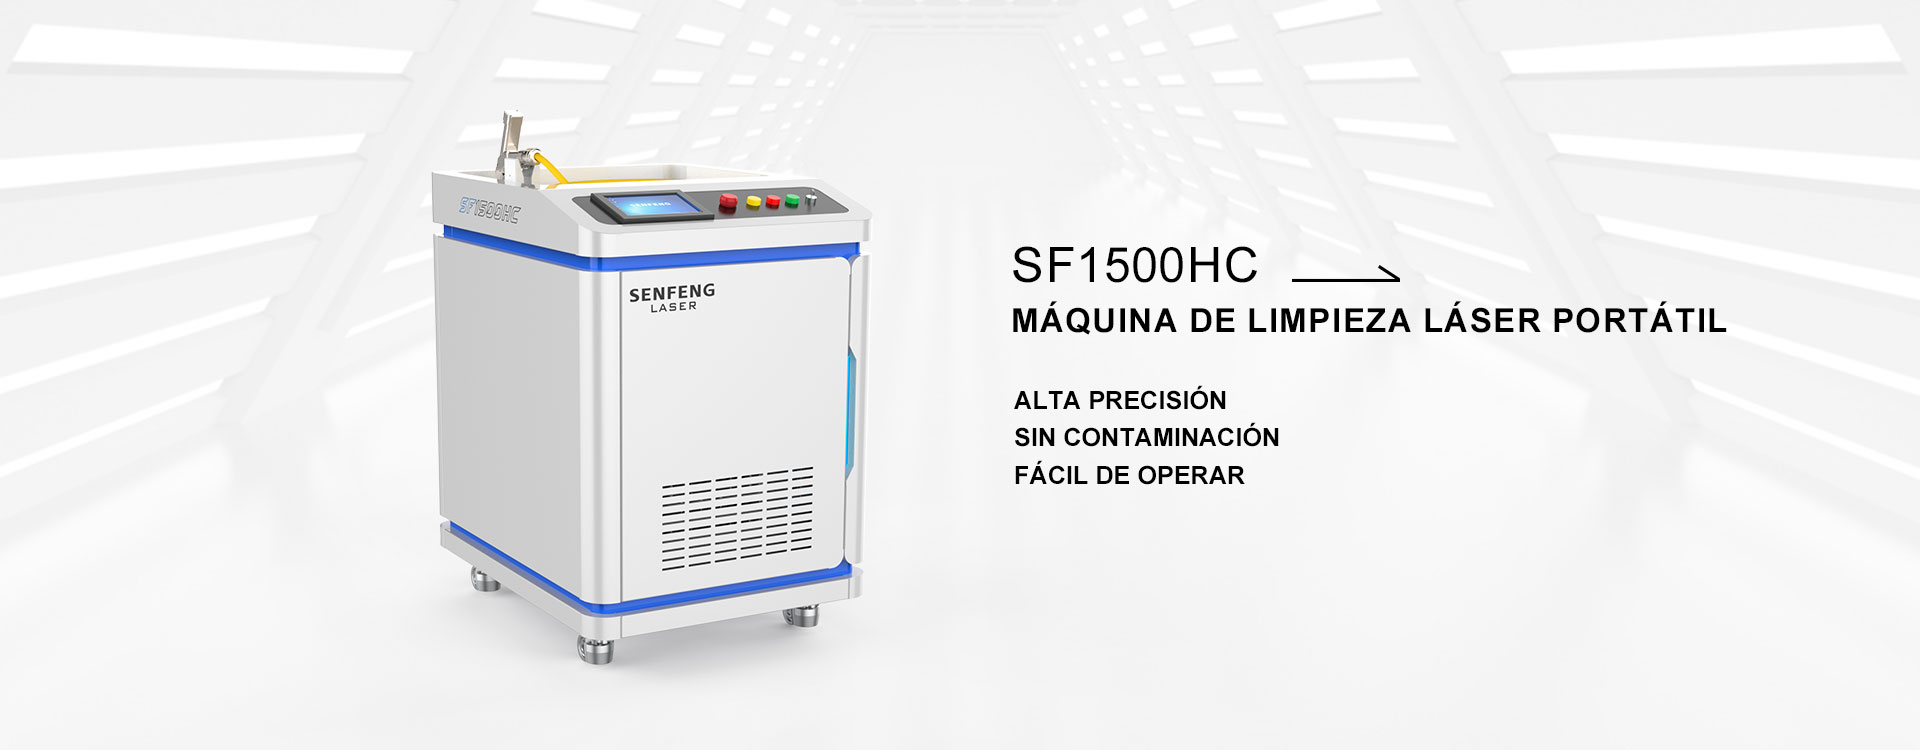 1SF1500HC Máquina de limpieza láser portátil